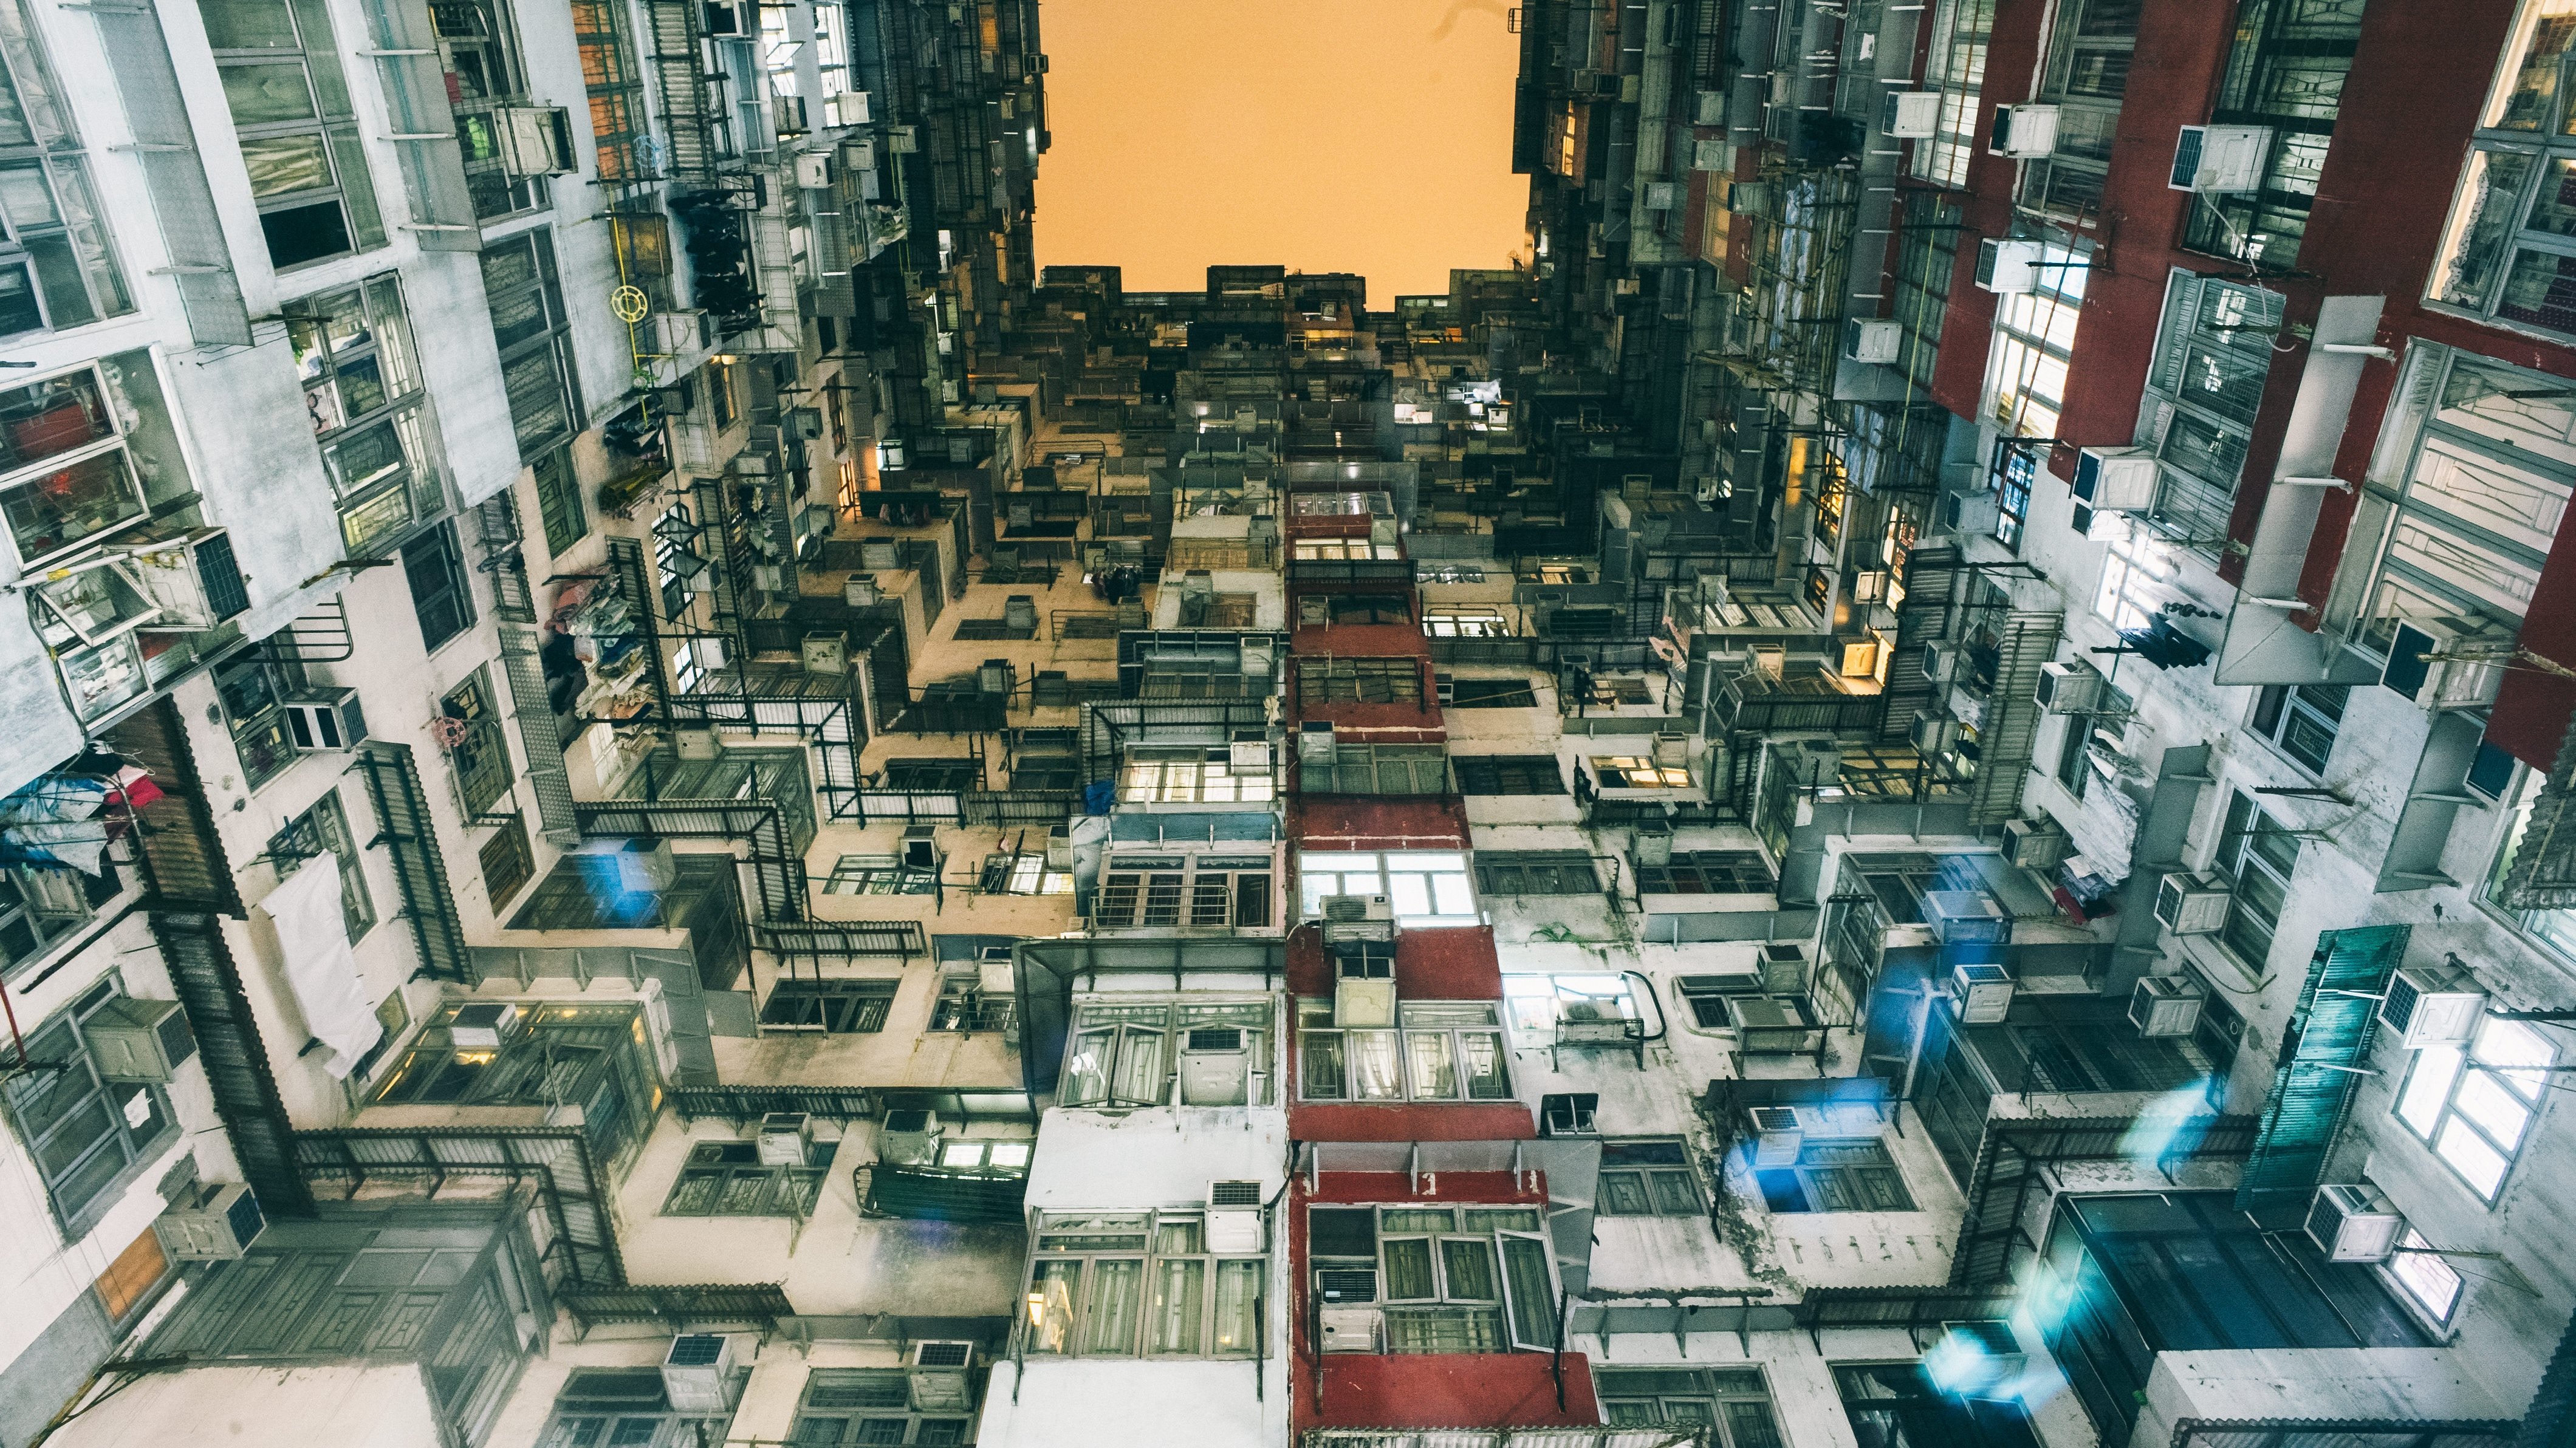 A cramped apartment building. | Source: Unsplash